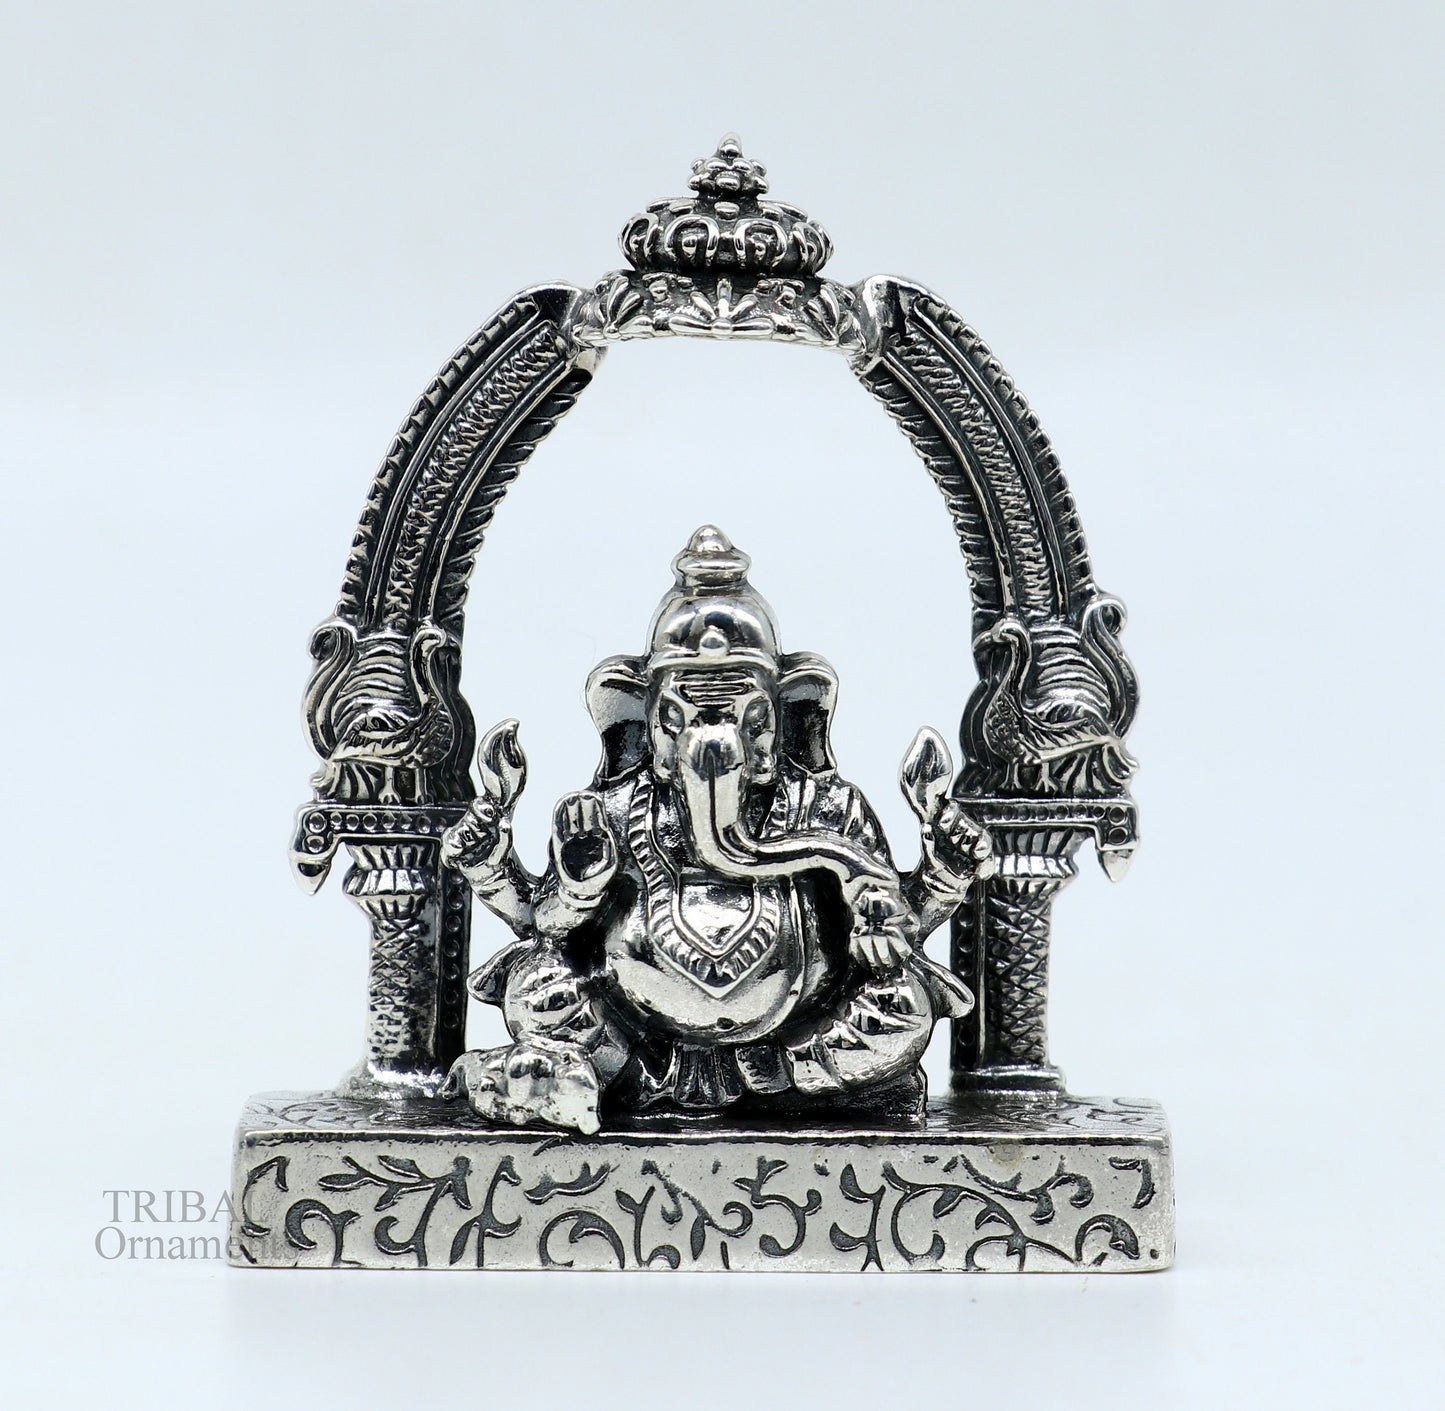 925 Sterling silver Lord Ganesh Idol, Pooja Articles, Silver Idols Figurine, handcrafted Lord Ganesh statue sculpture Diwali puja gift su229 - TRIBAL ORNAMENTS